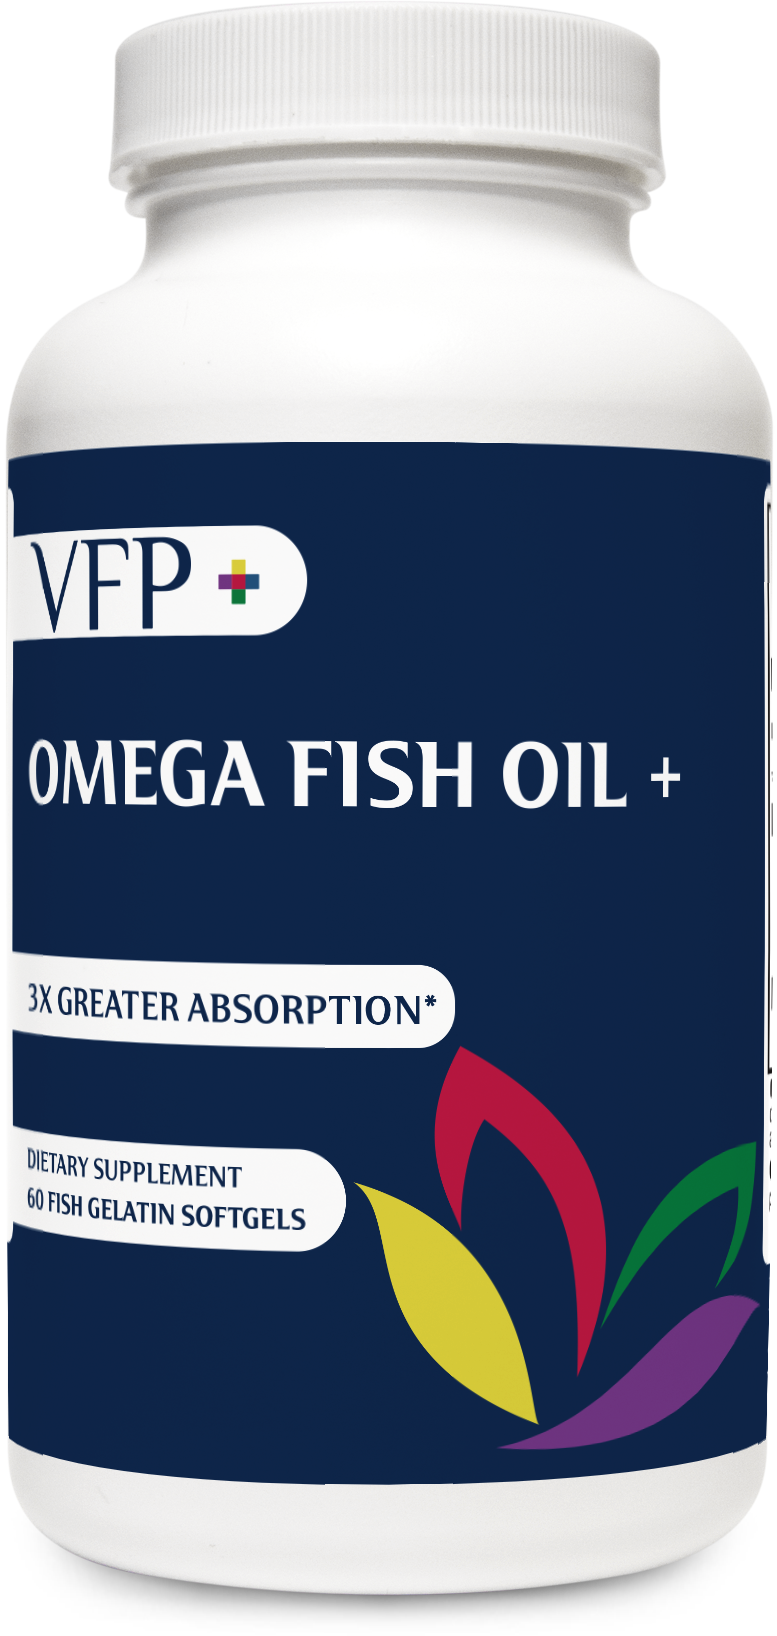 Omega Fish Oil +.